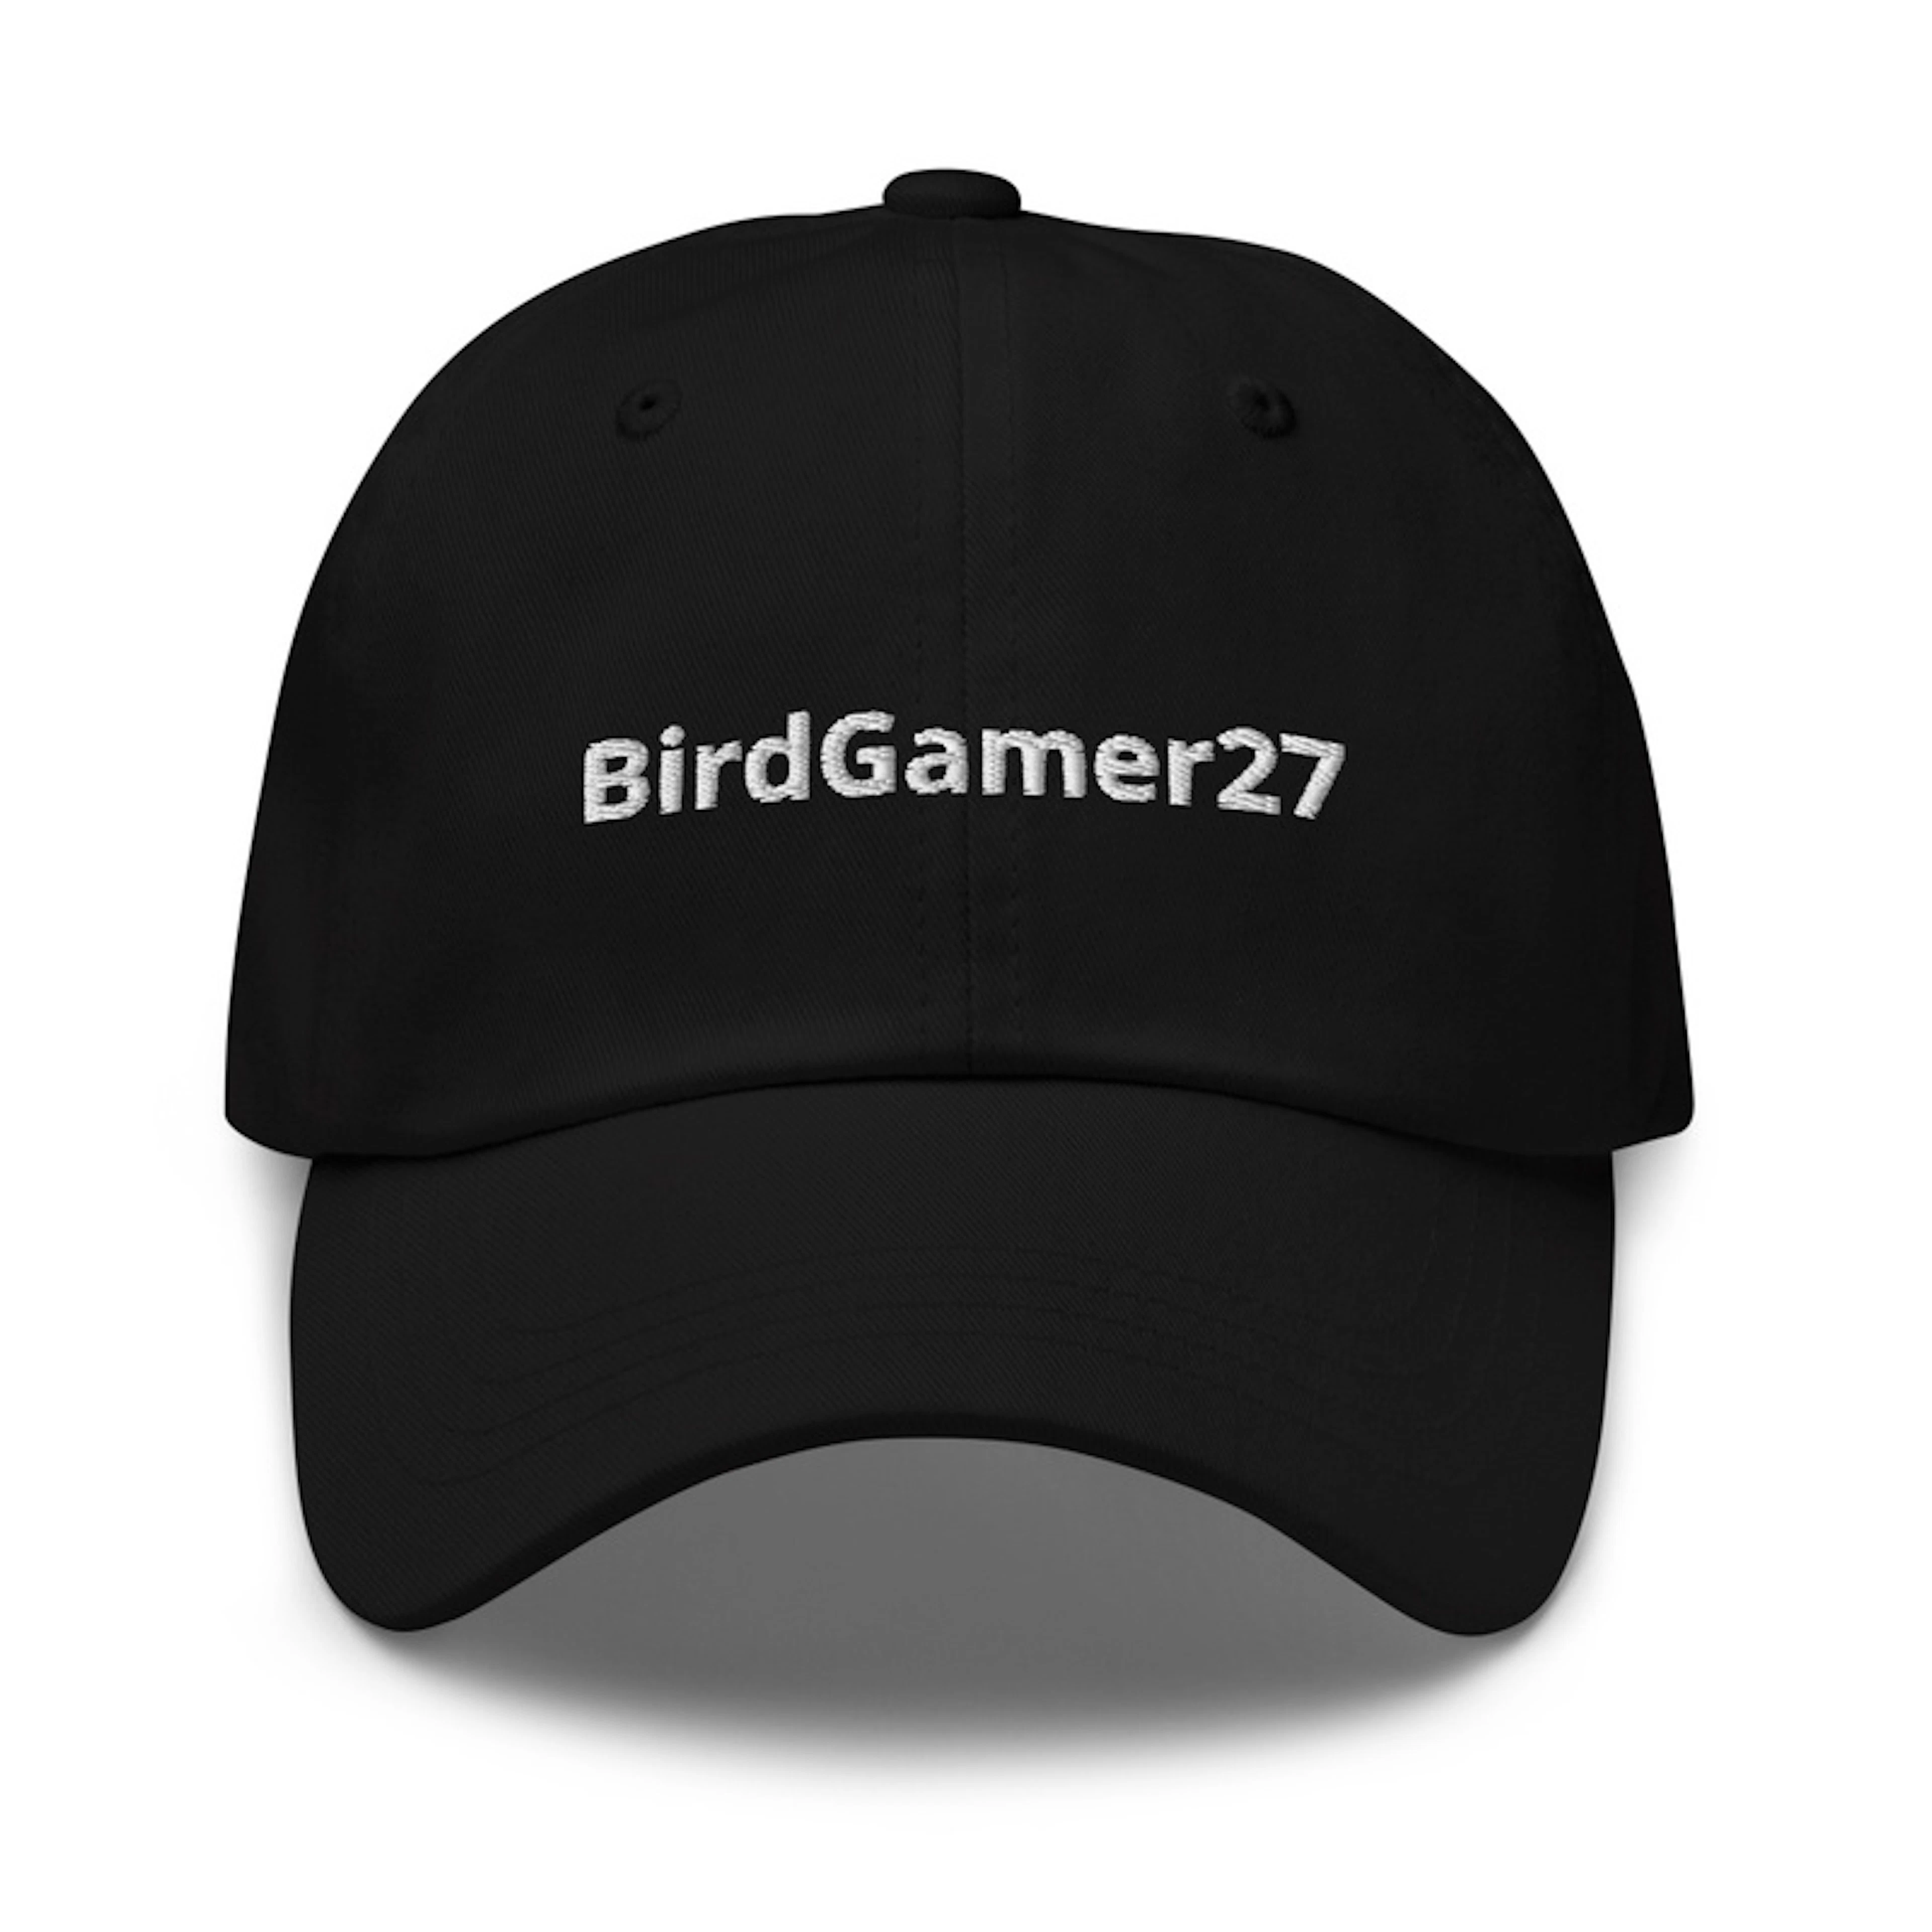 BirdGamer27 Text Cap